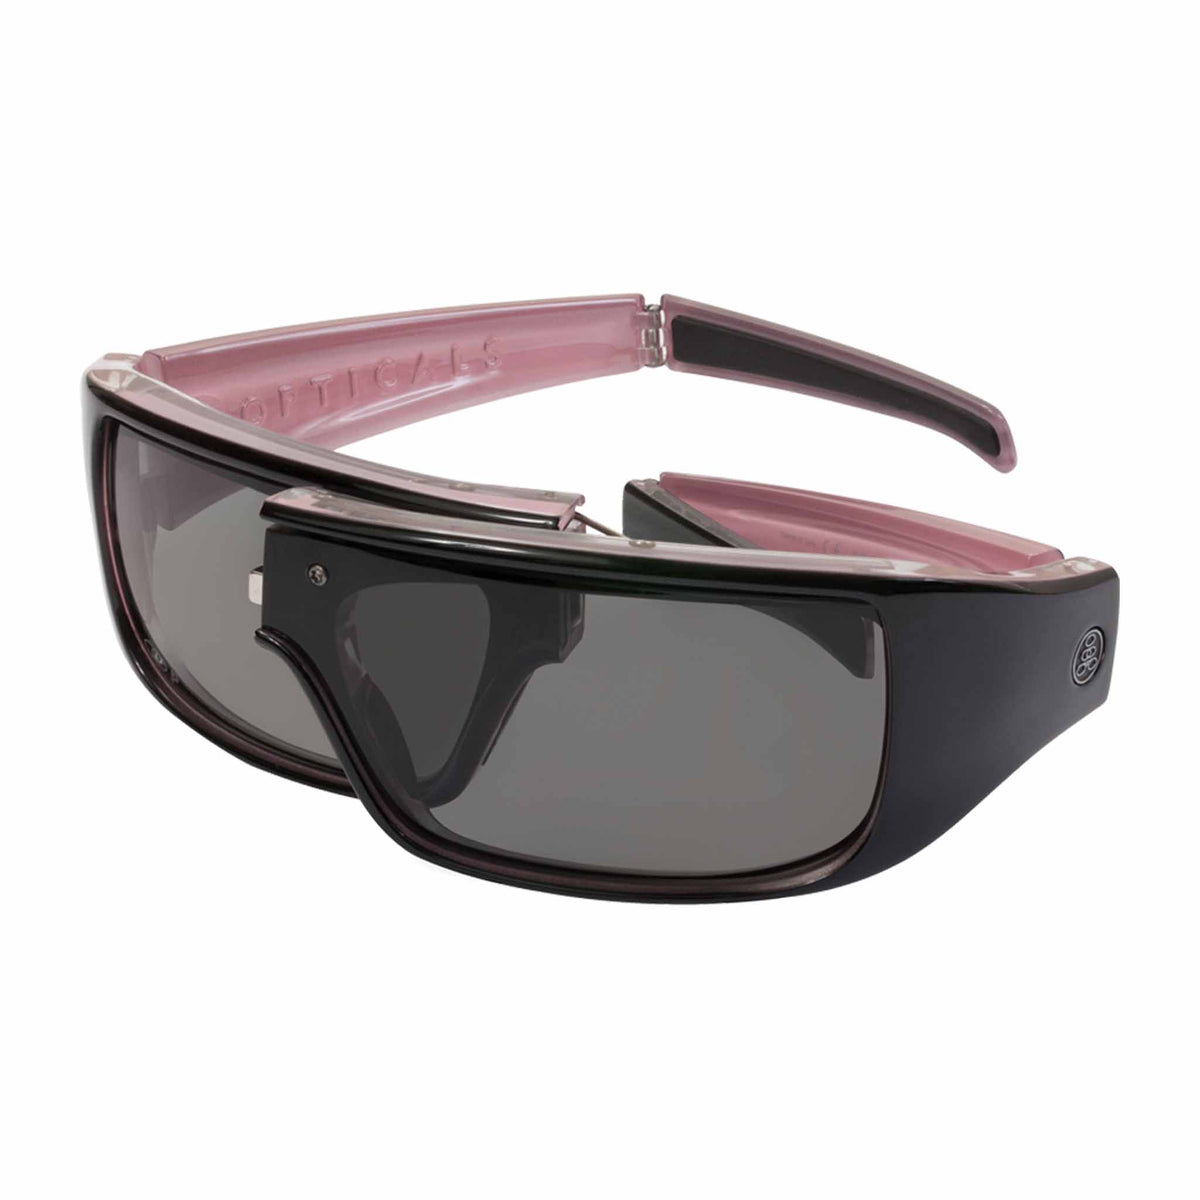 Popticals, Premium Compact Sunglasses, PopGear, 040051-KLGP, Polarized Sunglasses, Gloss Black over Pink Crystal Frame , Gray Lenses, Spider View